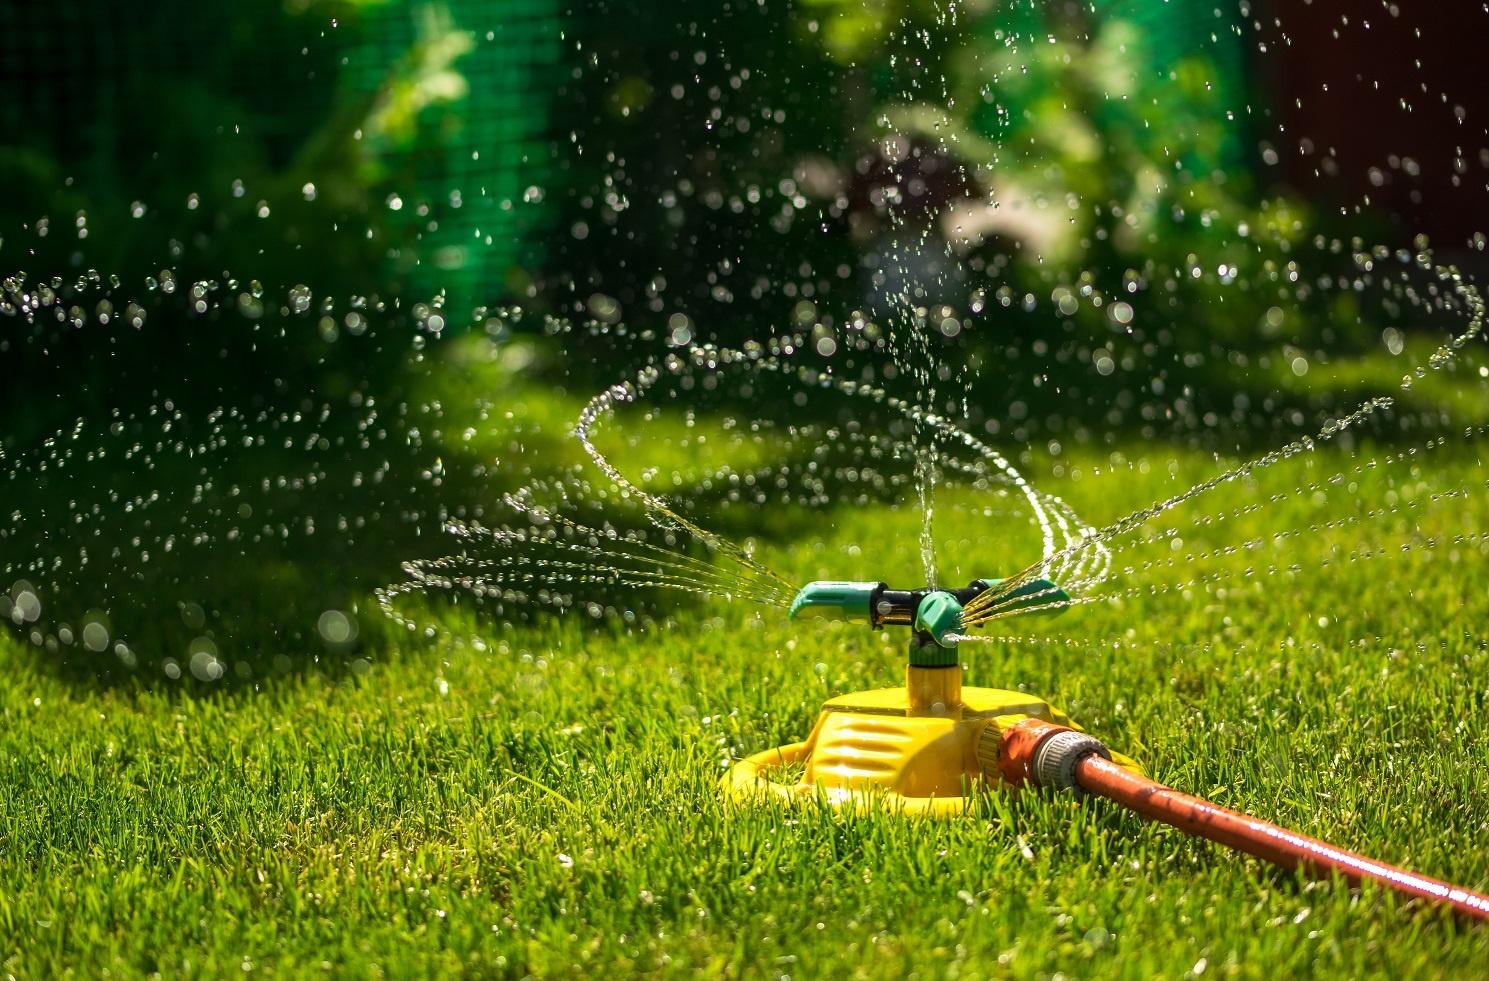 sprinkler watering grass GettyImages 955415878